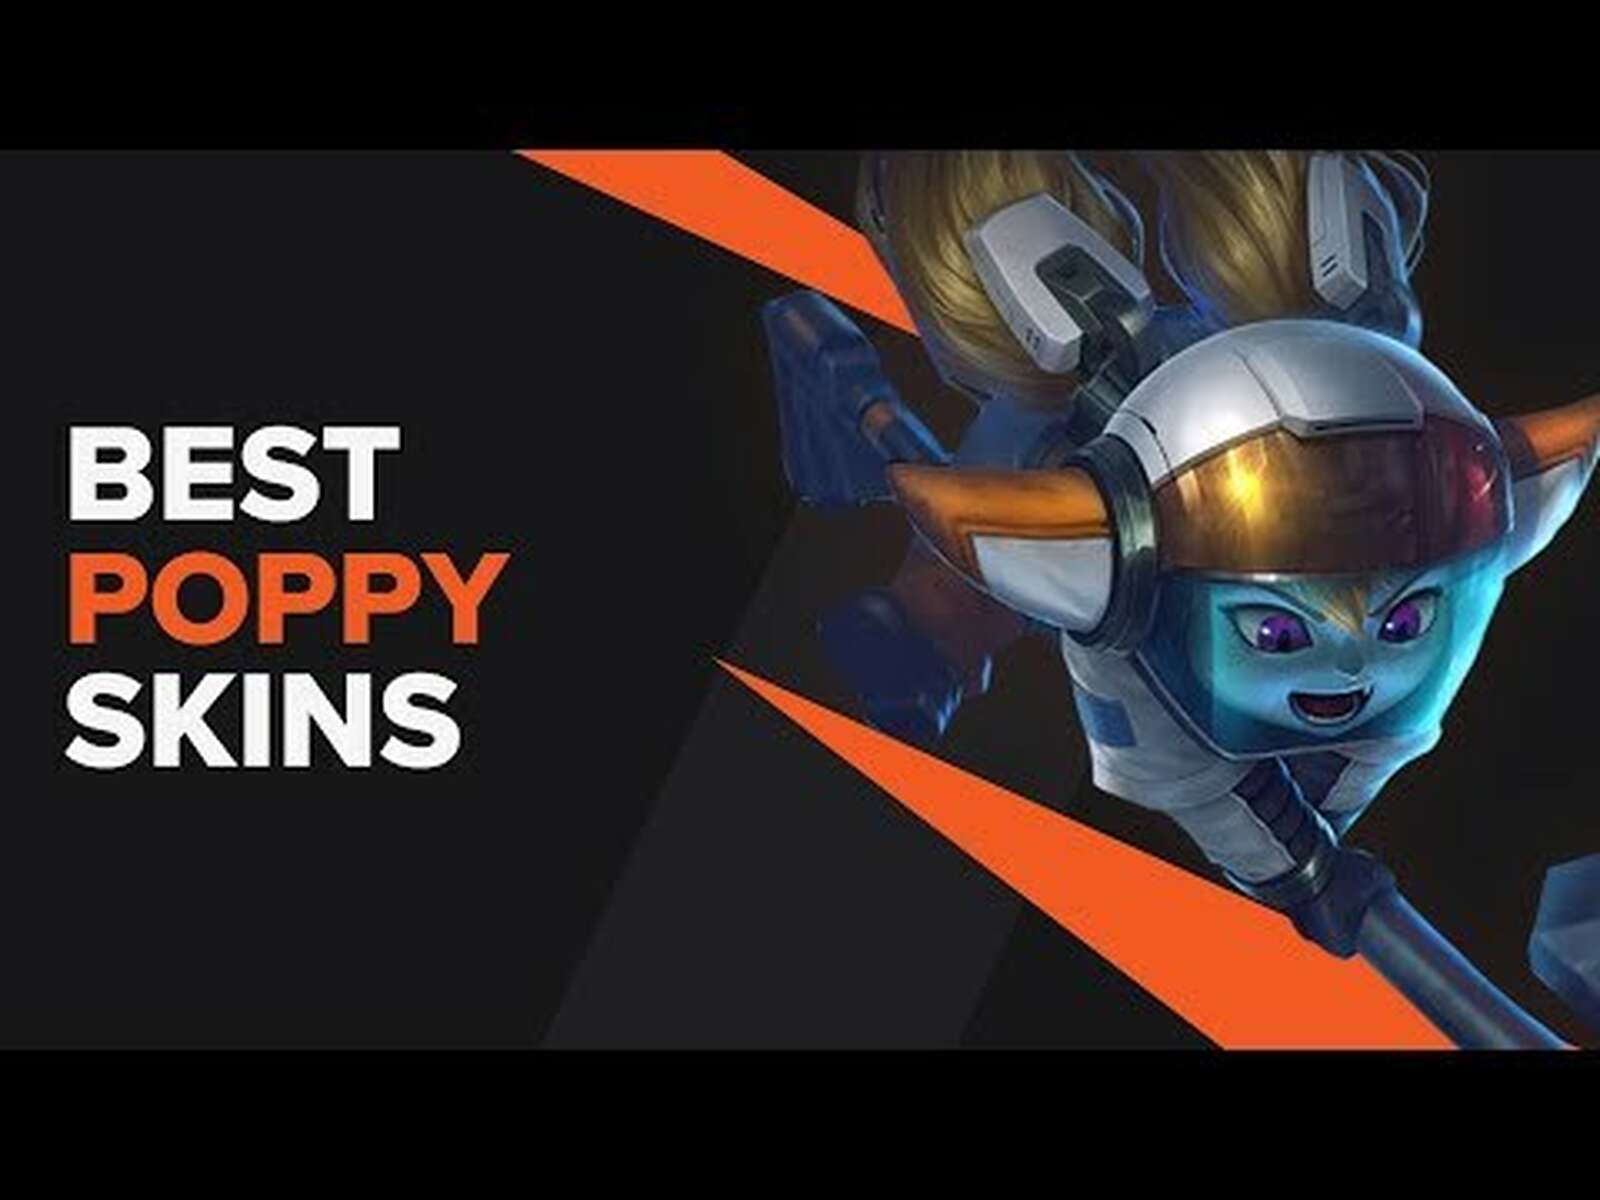 The Best Poppy Skins in League of Legends